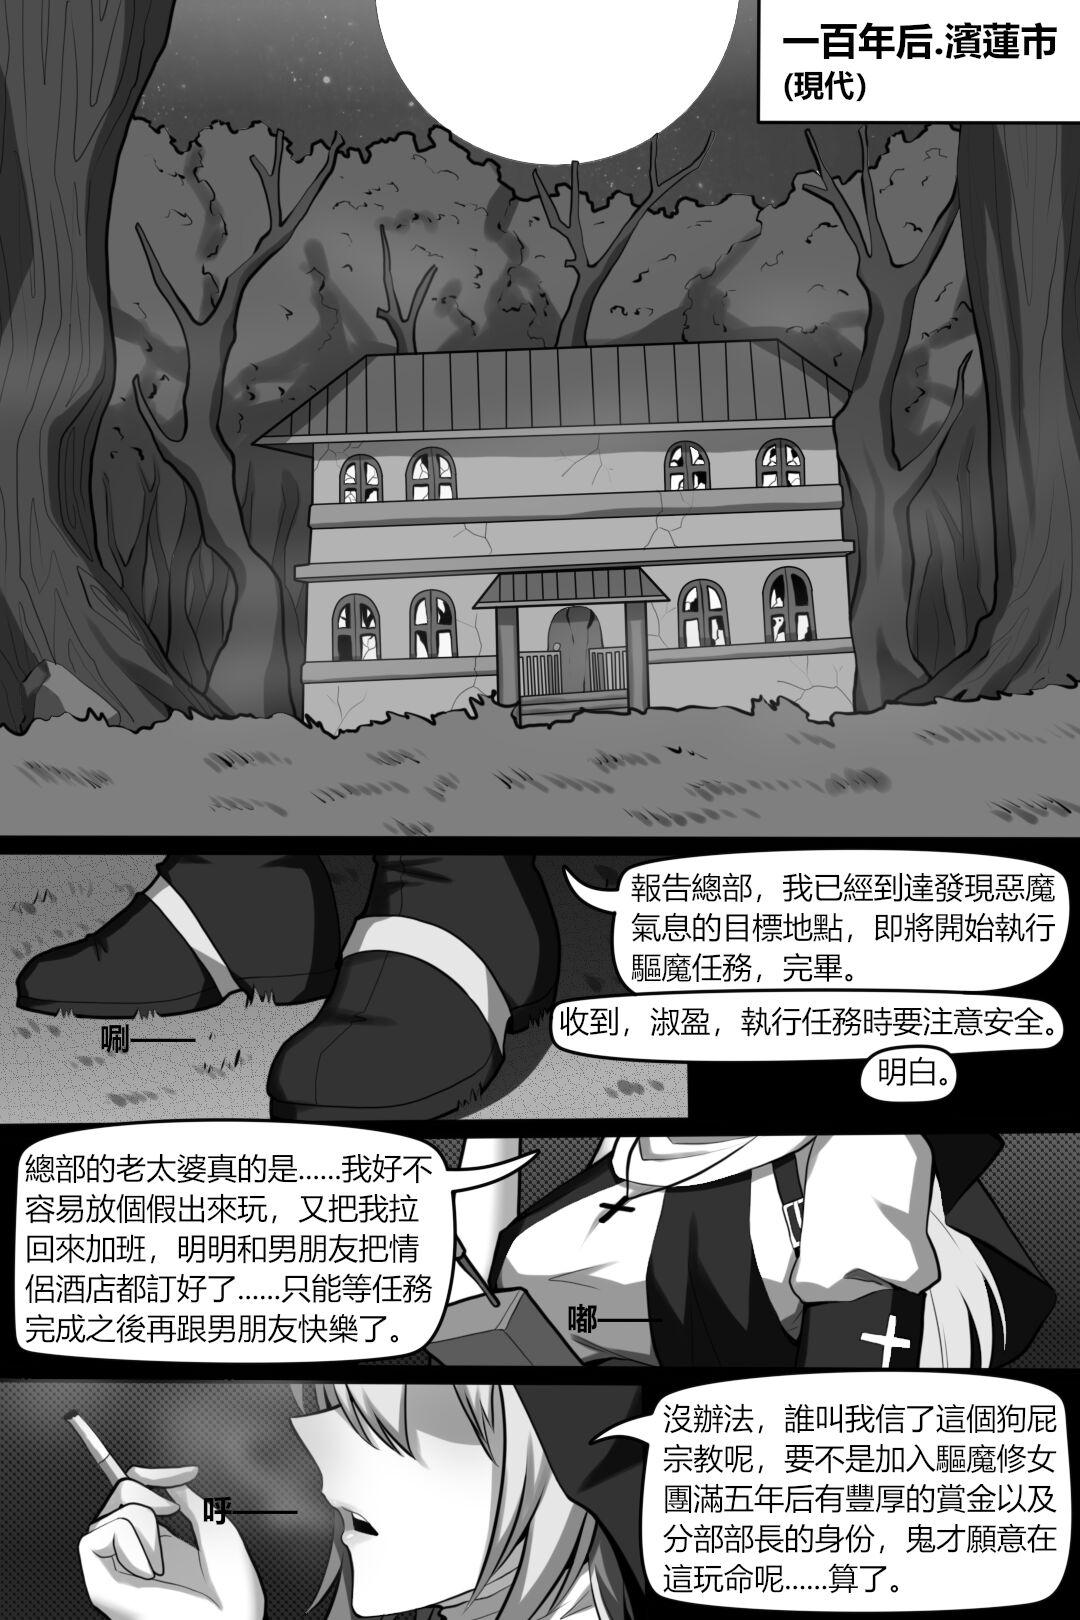 Wild Bin Lian City Stories Ch2: Exorcist Nun. - Original Yanks Featured - Picture 2